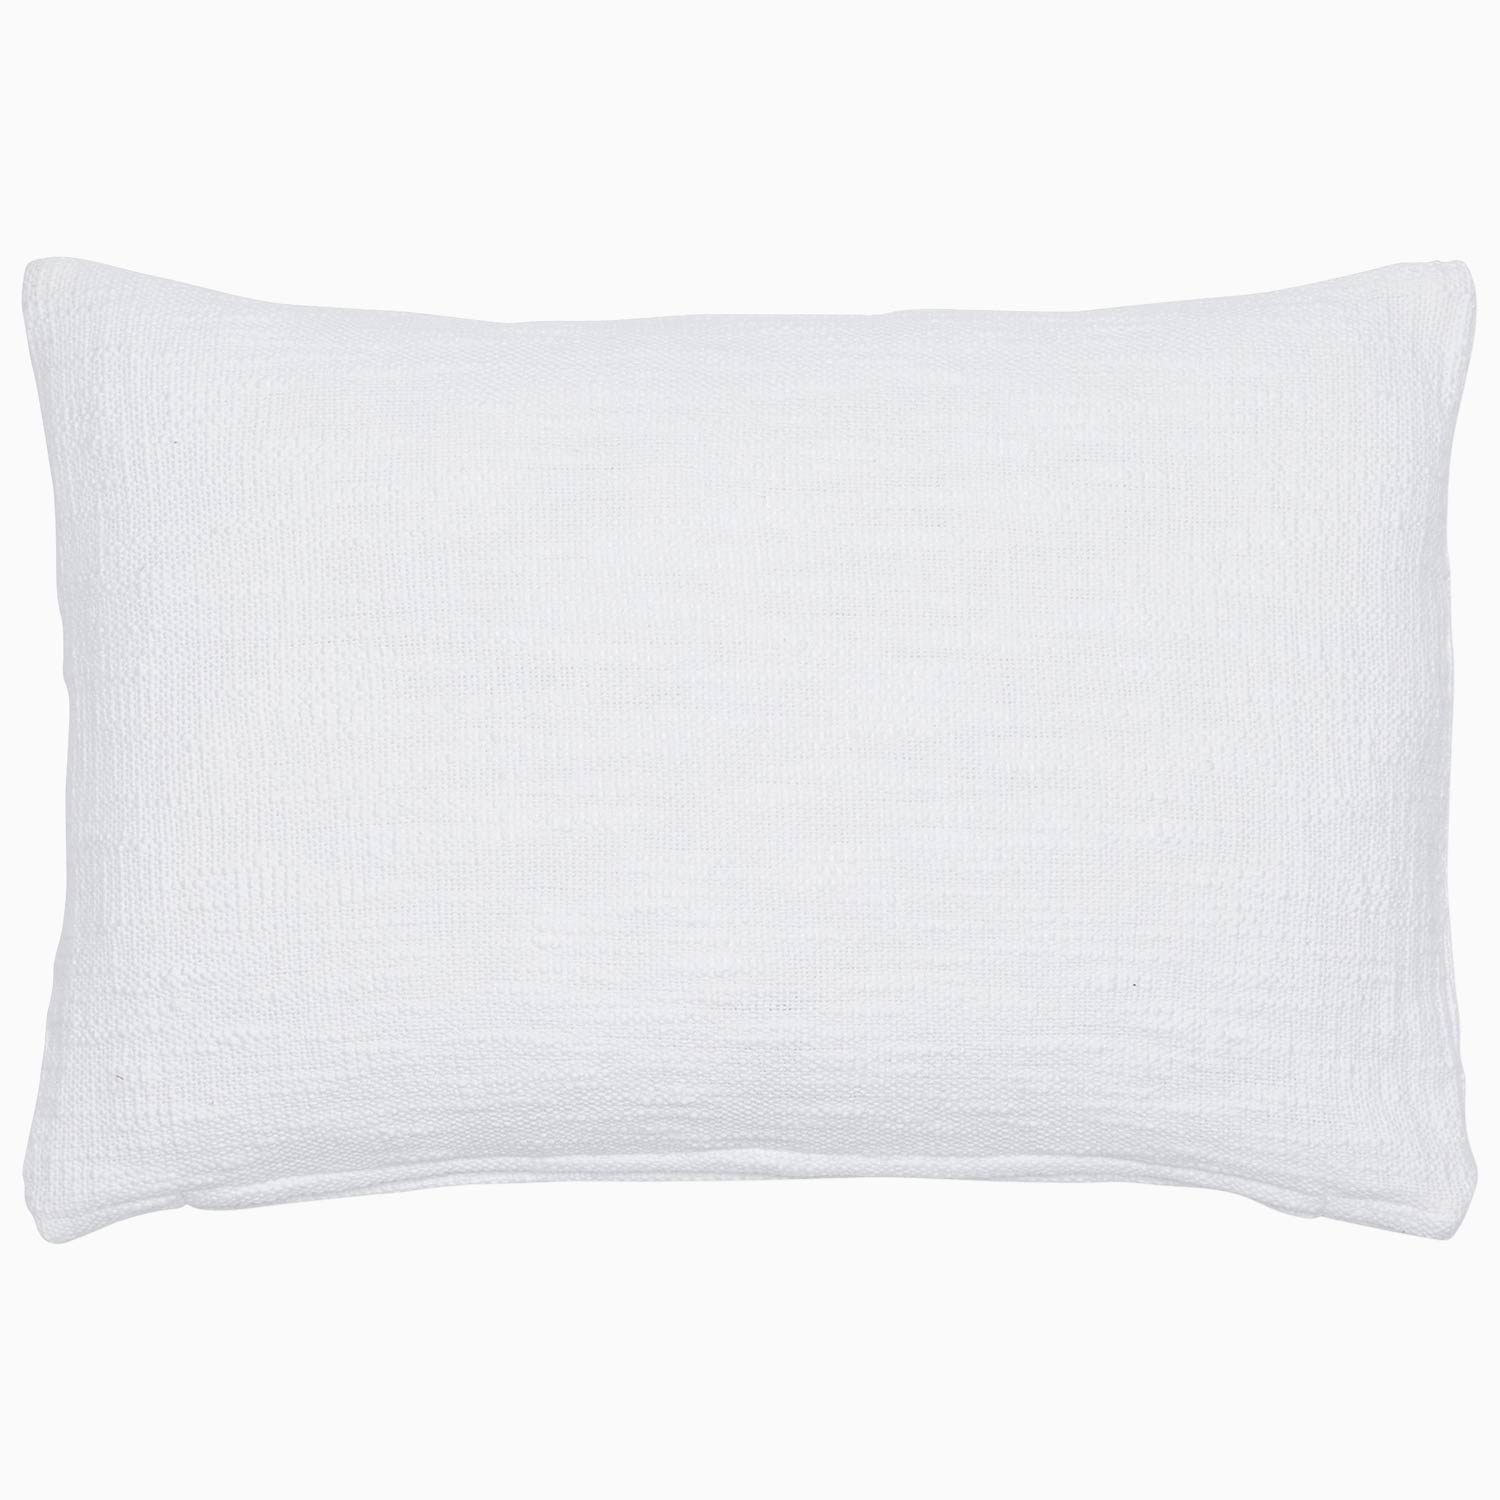 Woven White Kidney Pillow Main